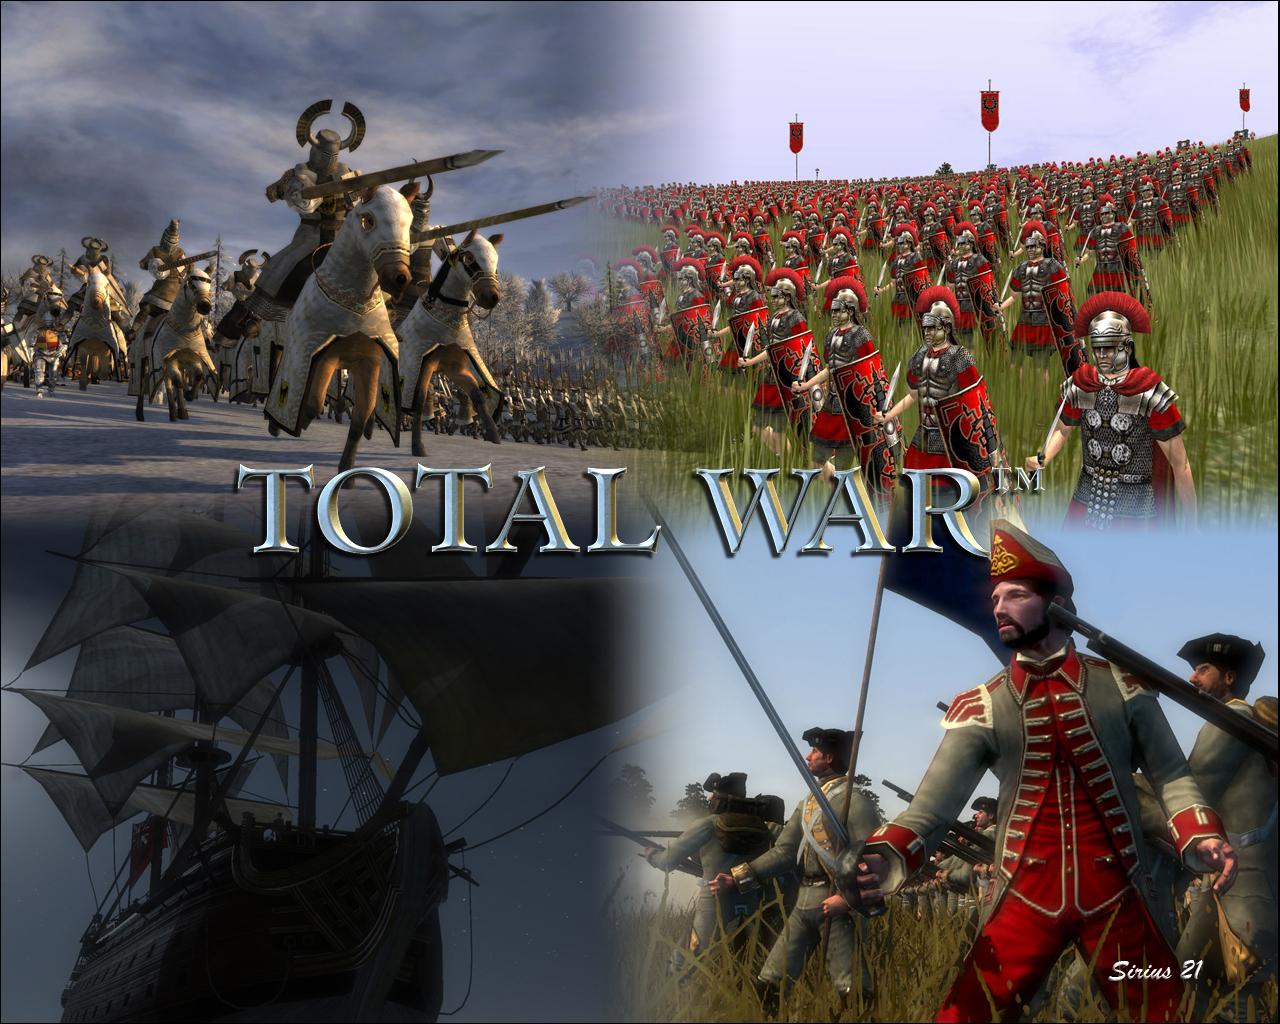 Wallpapers Empire Total War Total War Games Image Download